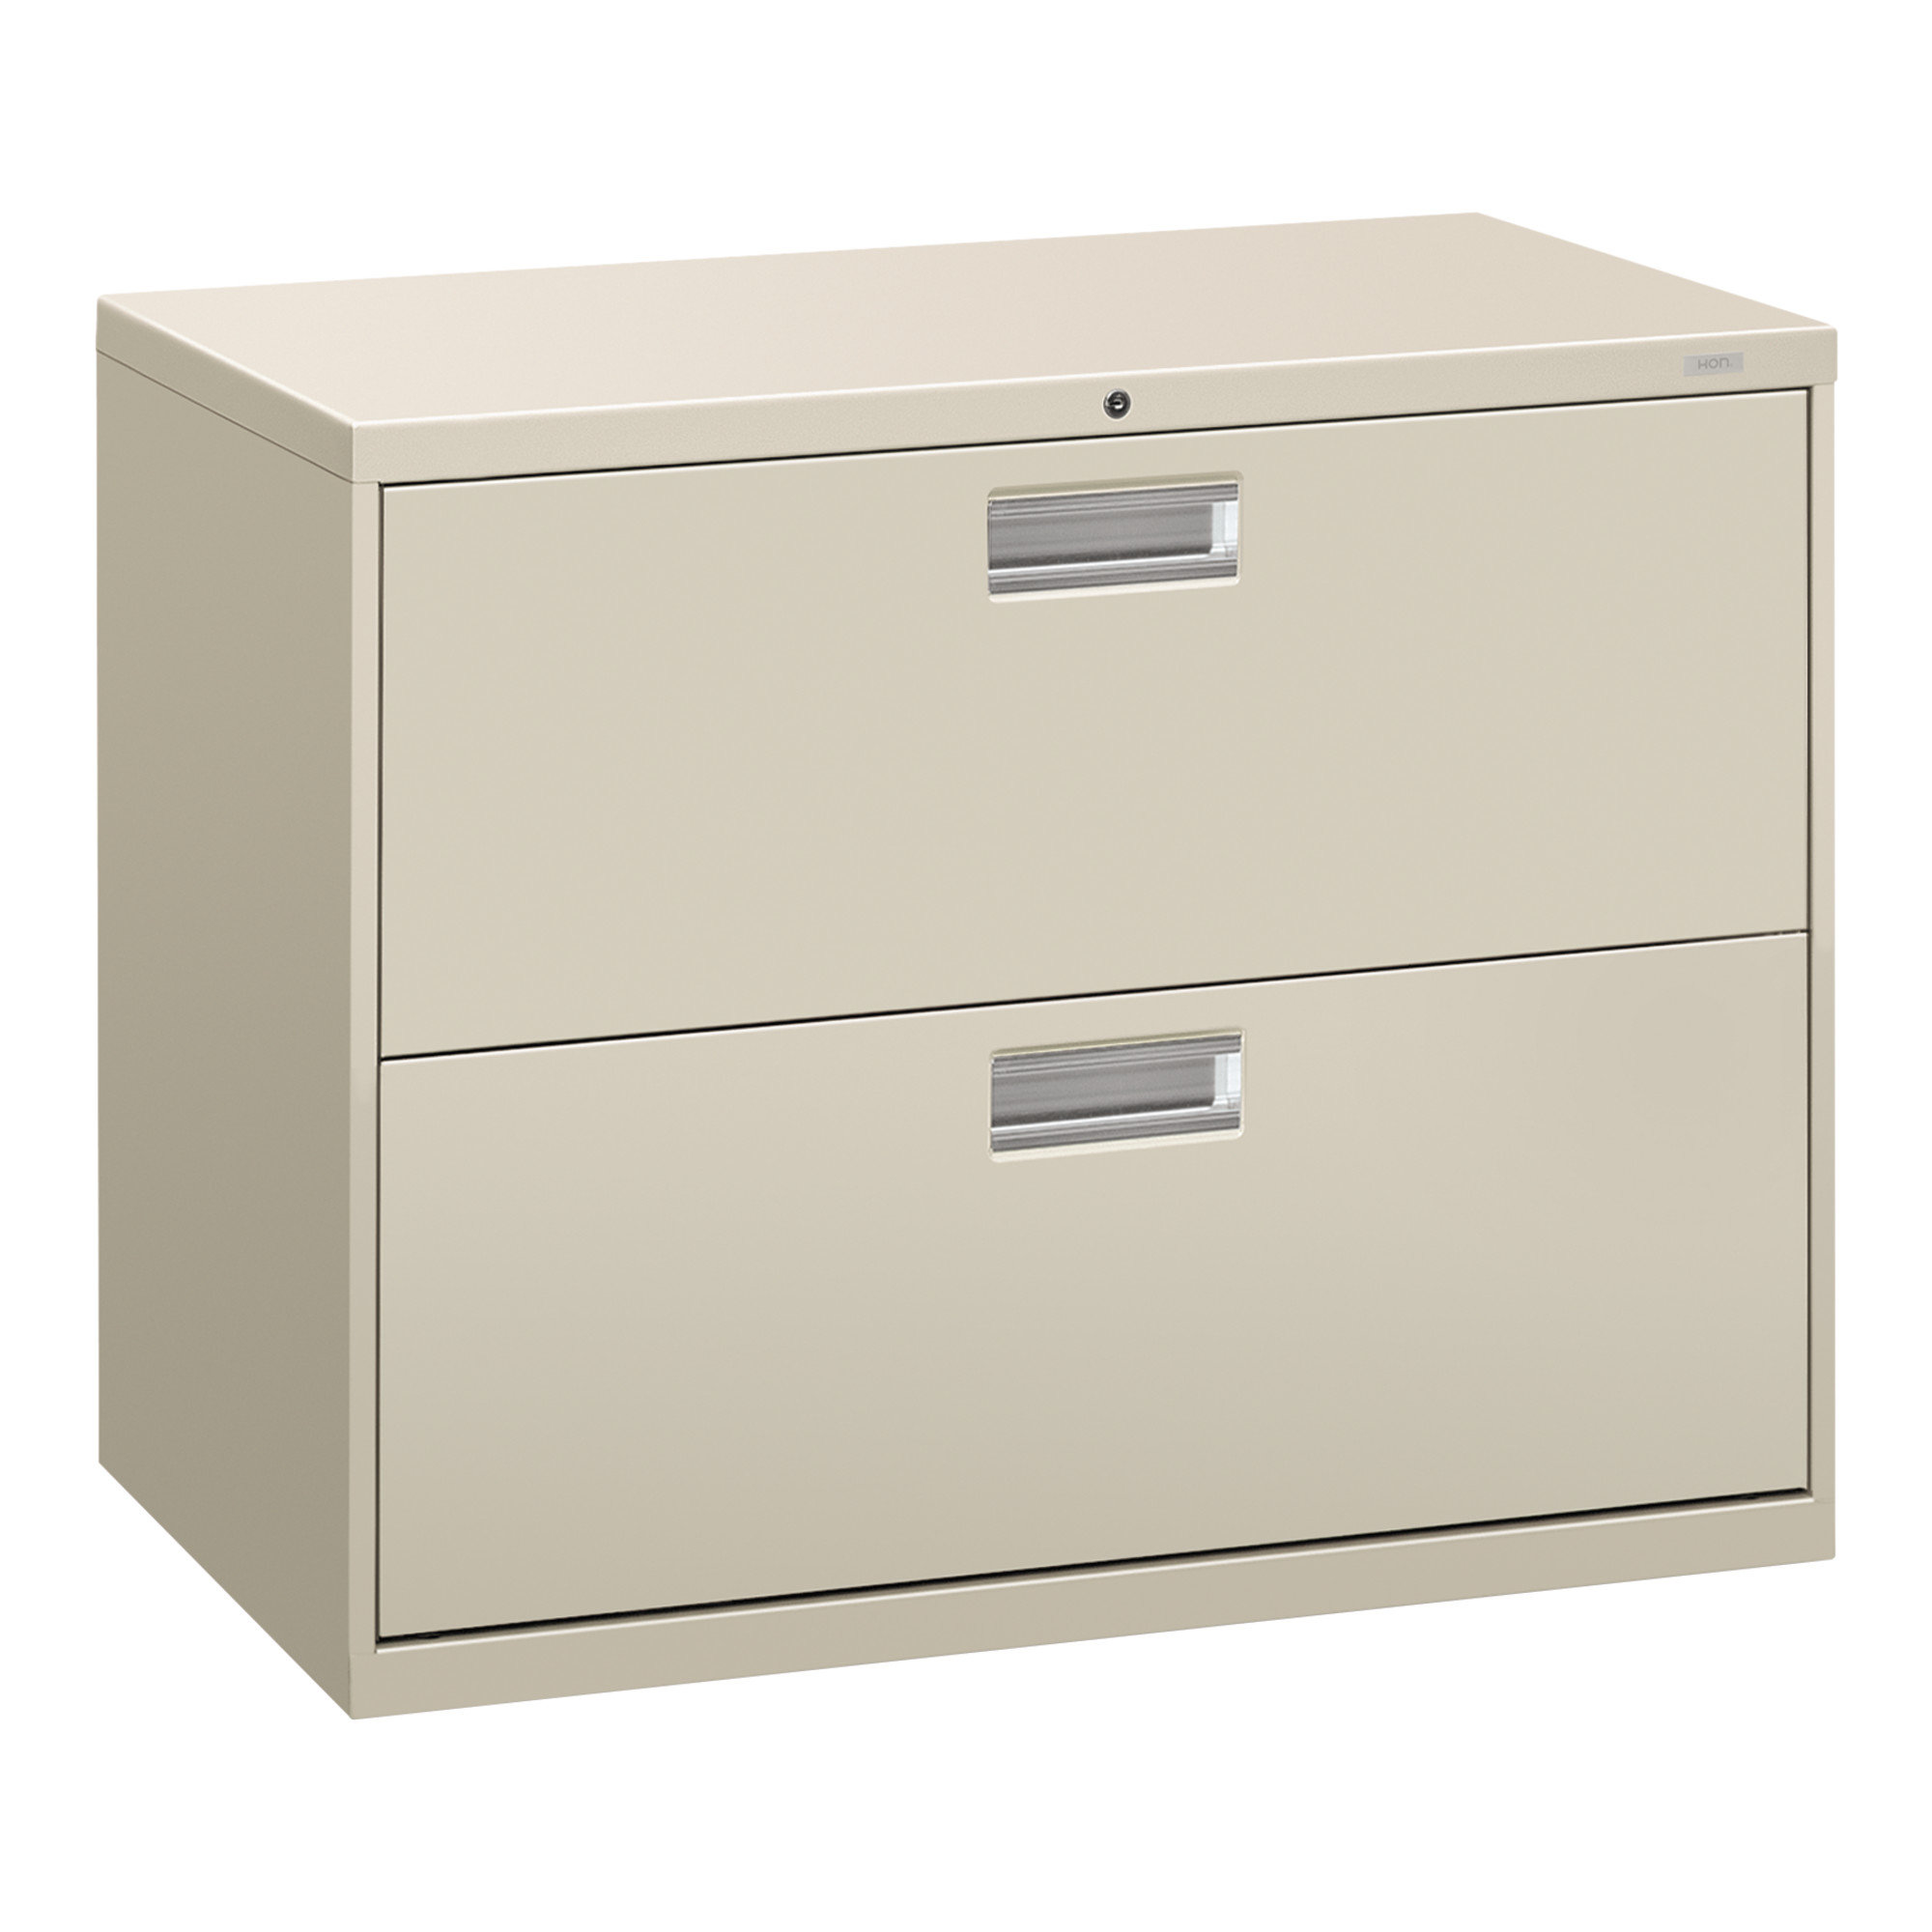 Hon 600 Series 2 Drawer Lateral Filing Cabinet Reviews Wayfair